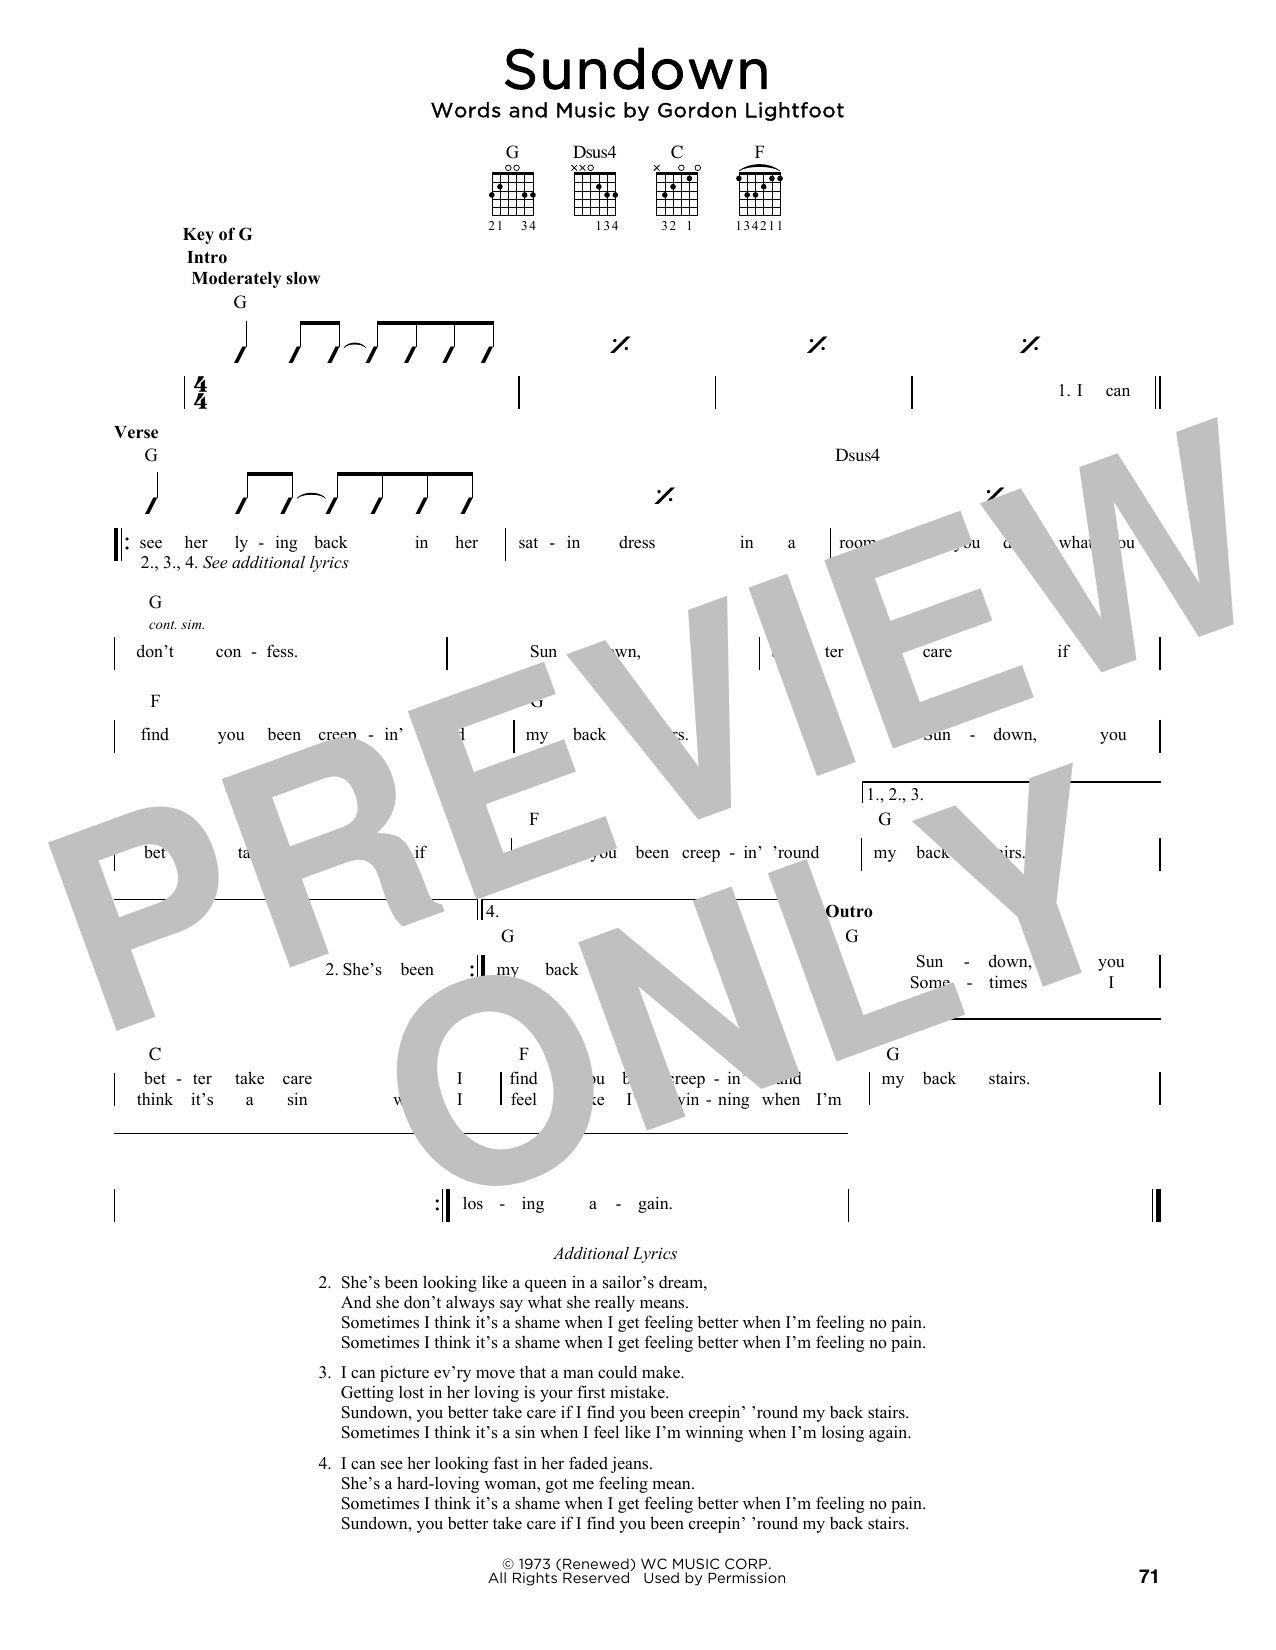 Gordon Lightfoot Sundown Sheet Music Notes & Chords for Melody Line, Lyrics & Chords - Download or Print PDF